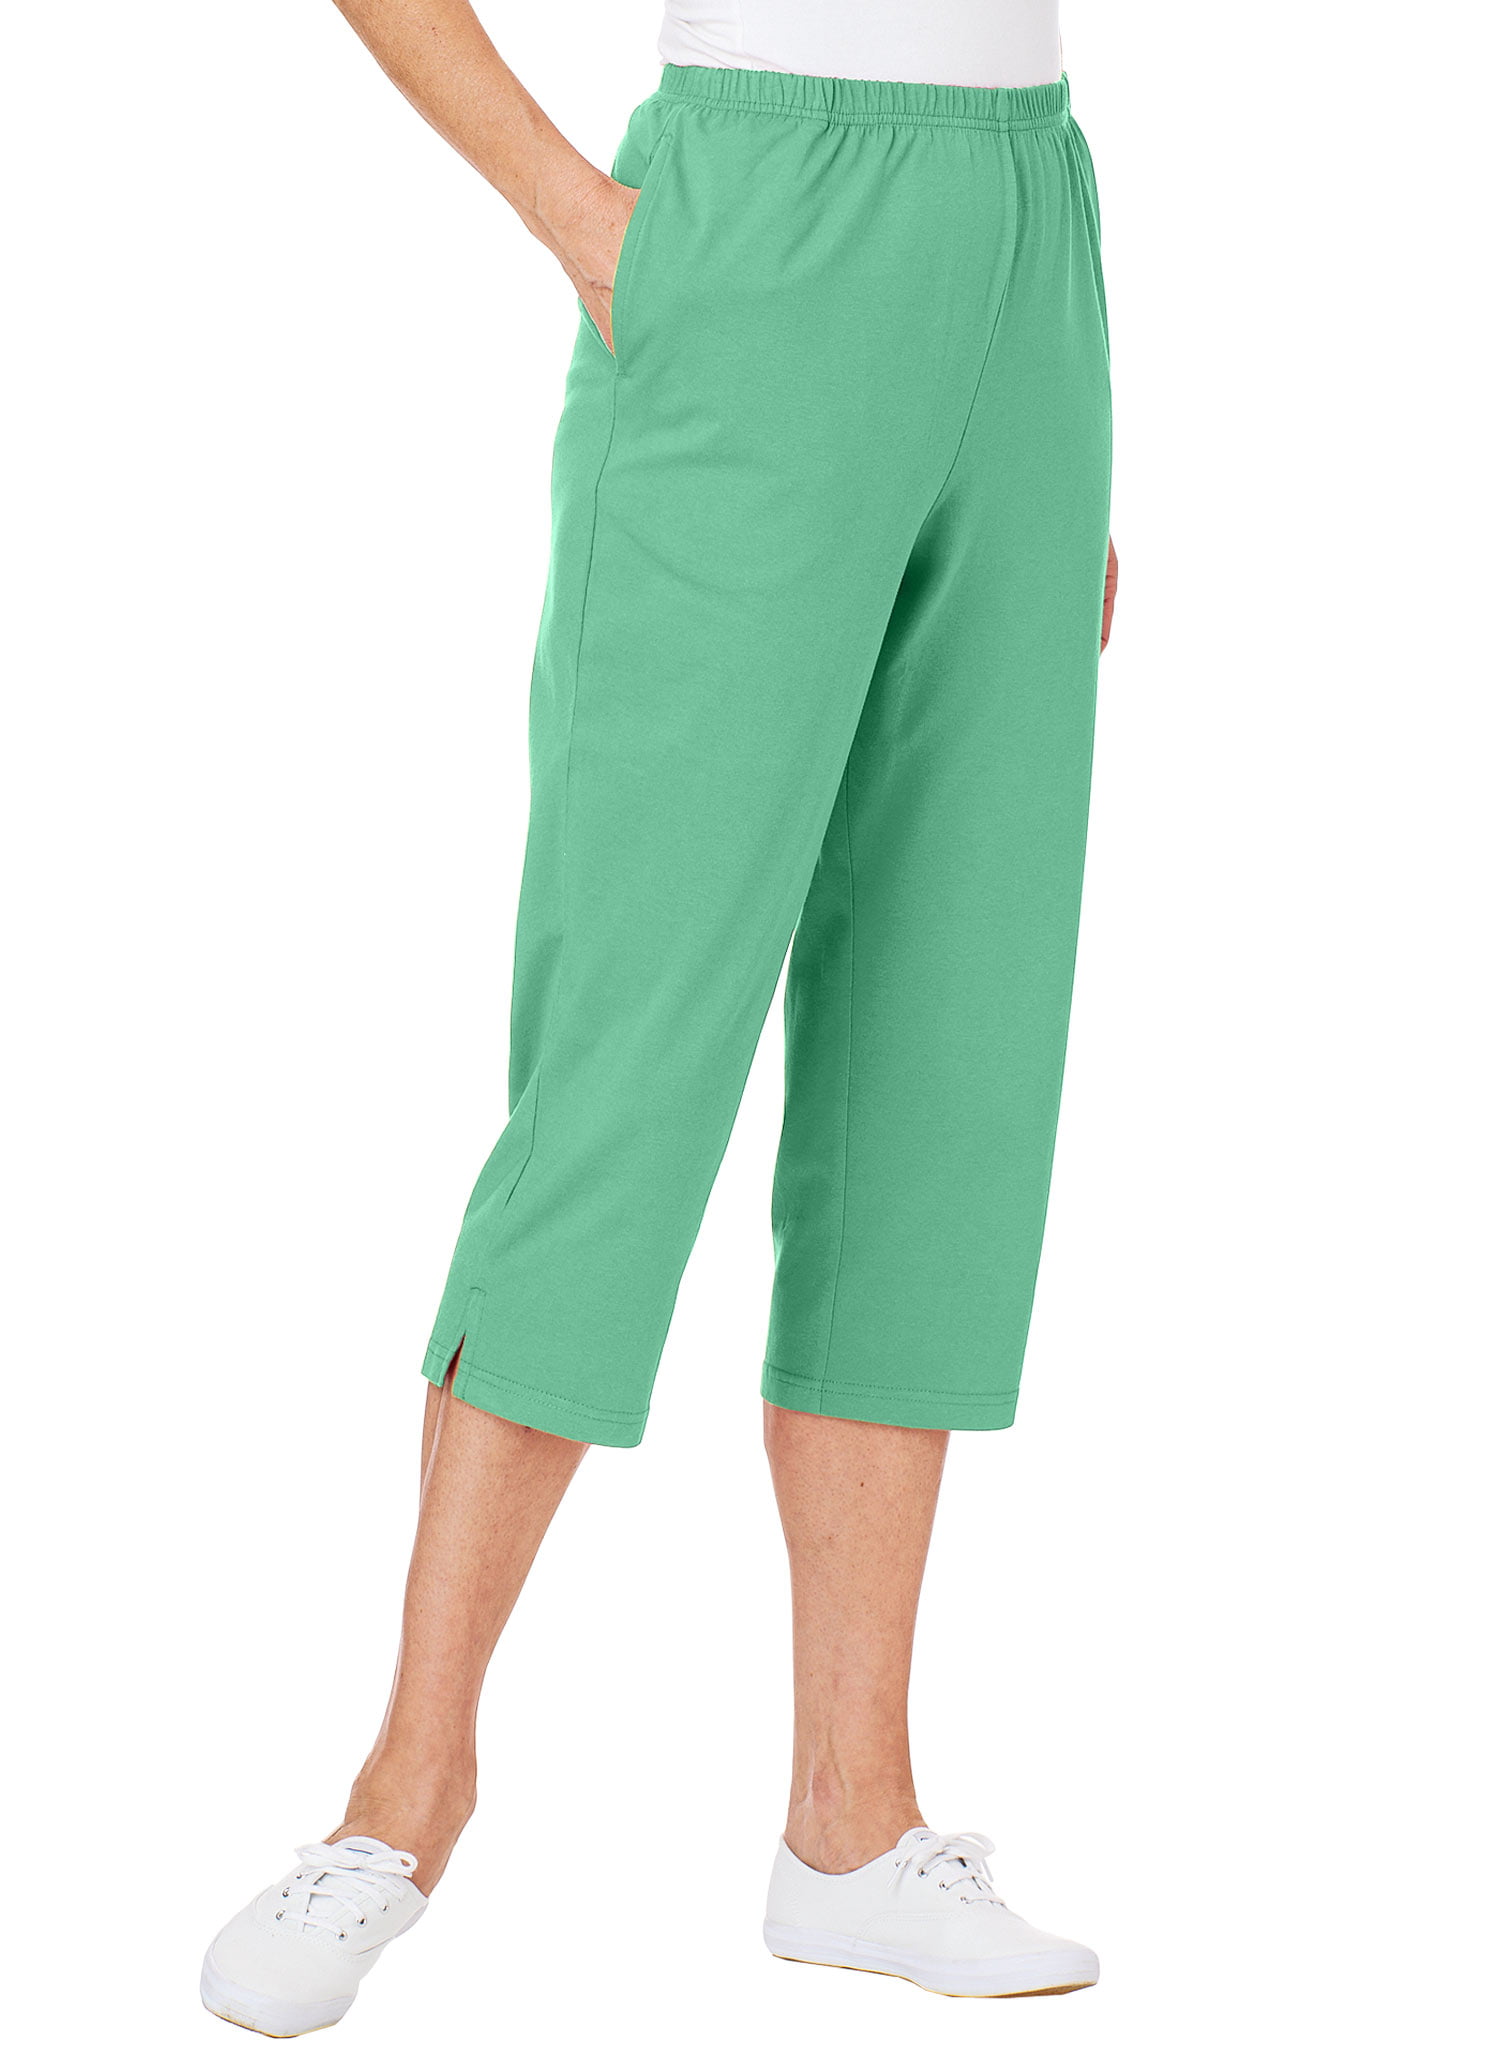 AmeriMark Women's Knit Capris 100% Cotton Pants with Stretch Elastic ...